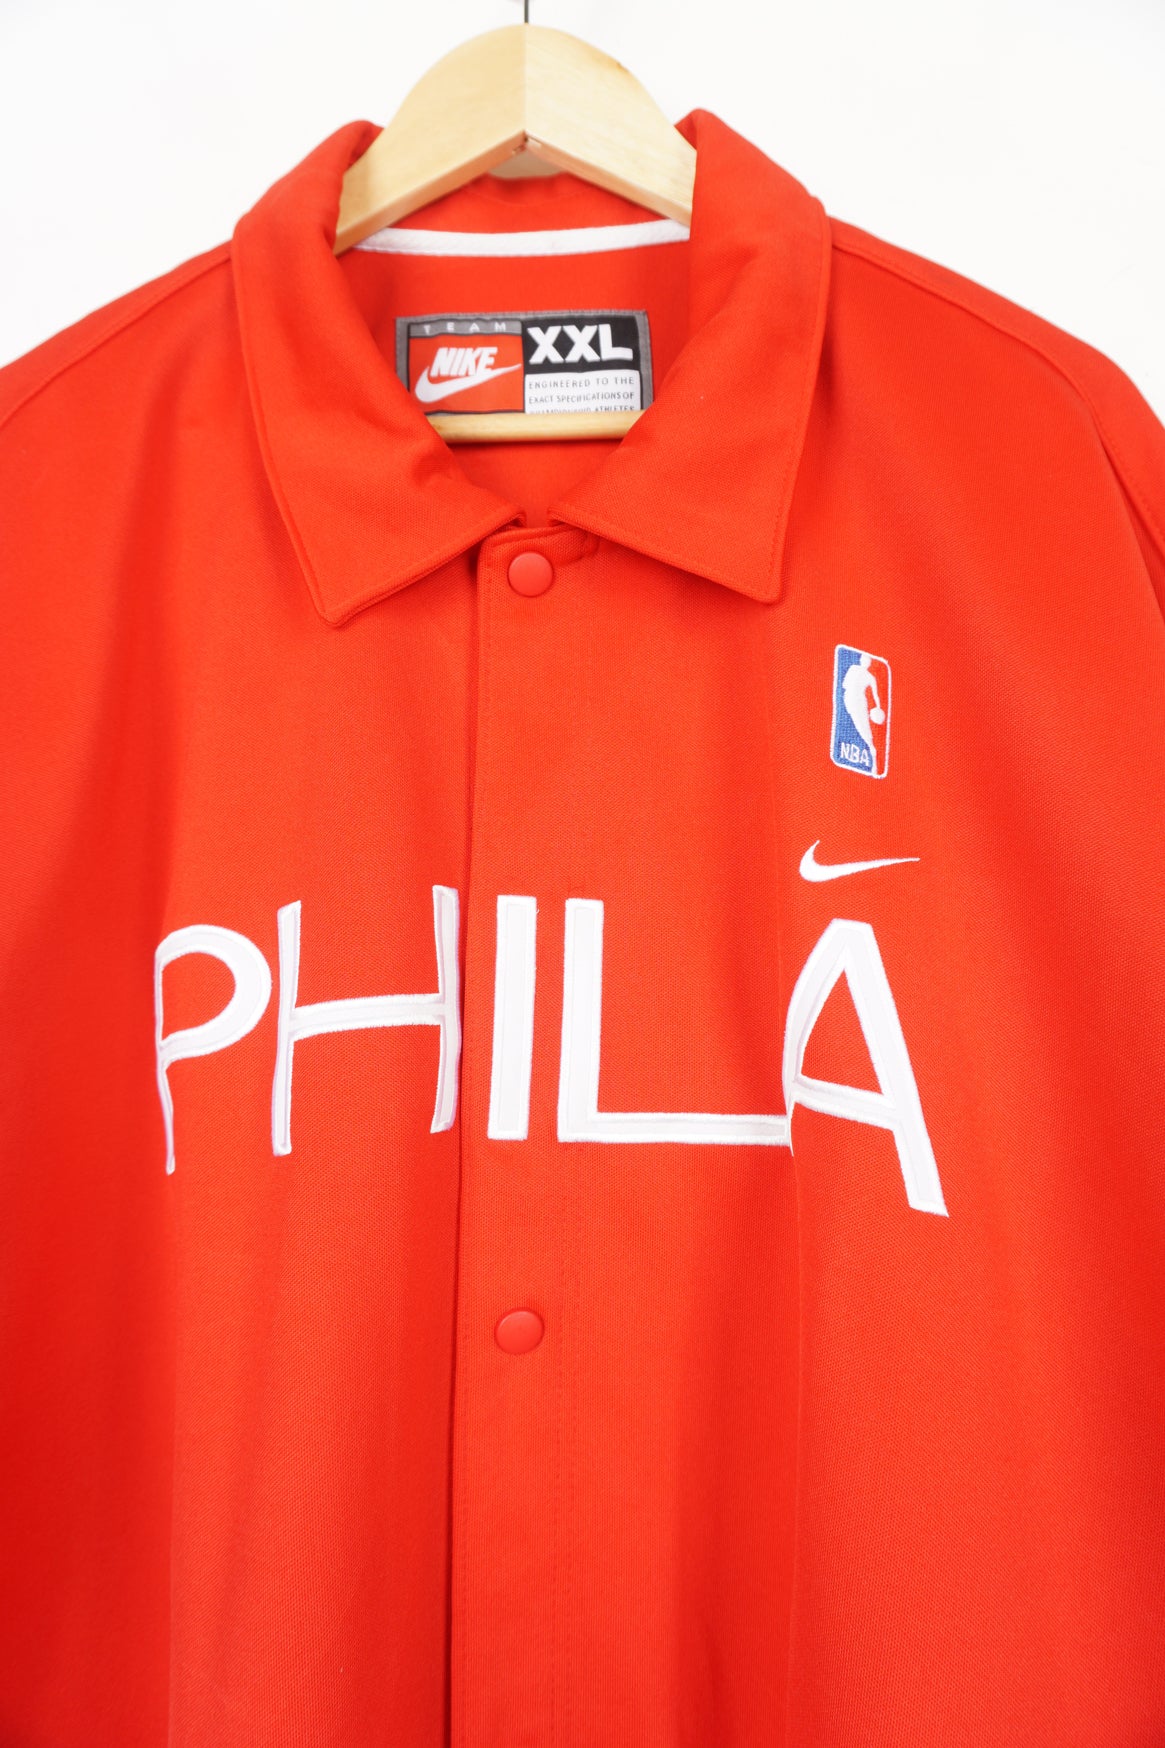 Vintage Philadelphia 76ers Jersey Blank S – Laundry